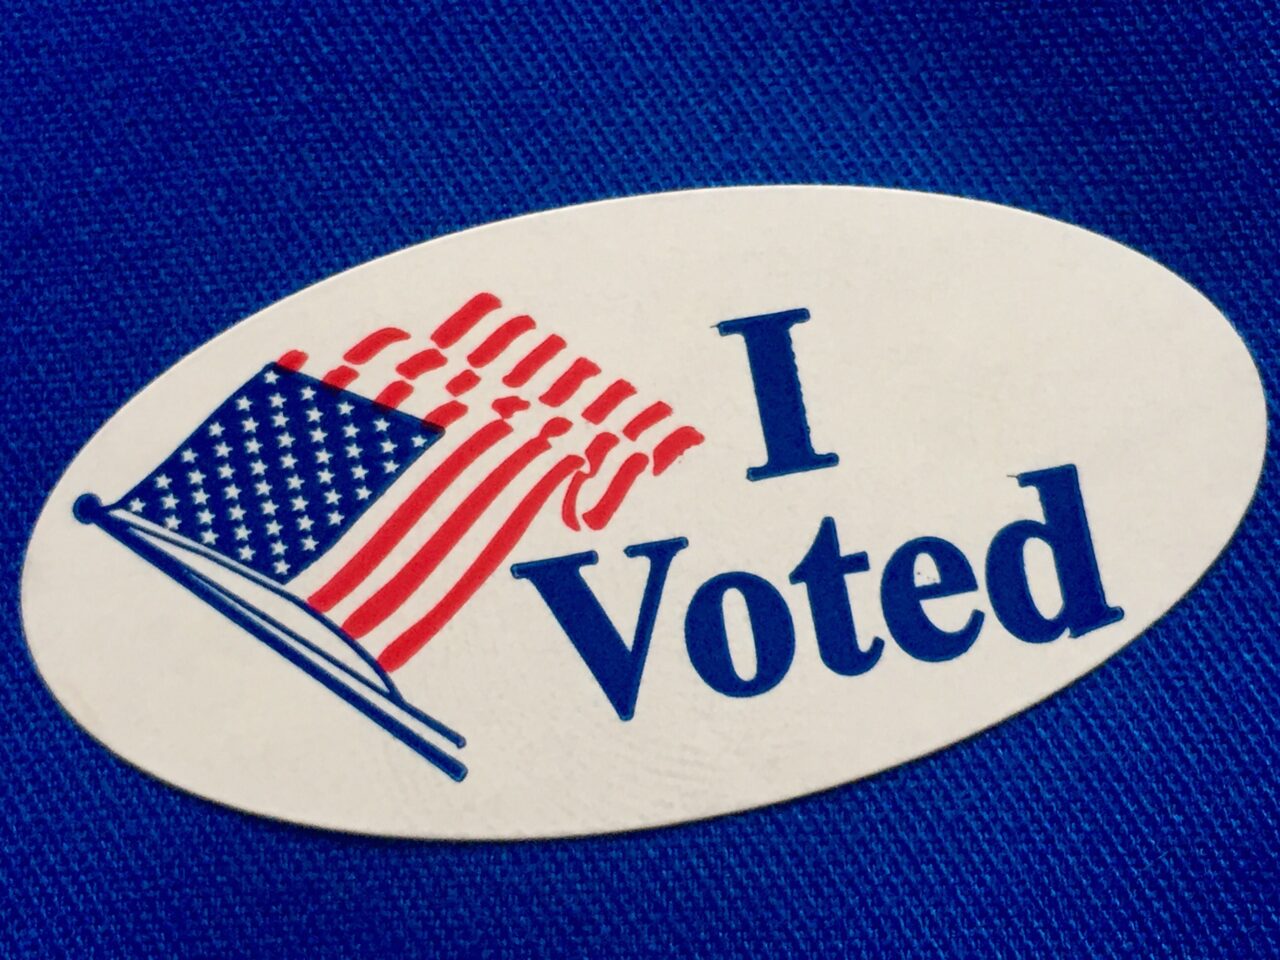 "I voted" sticker on blue fabric